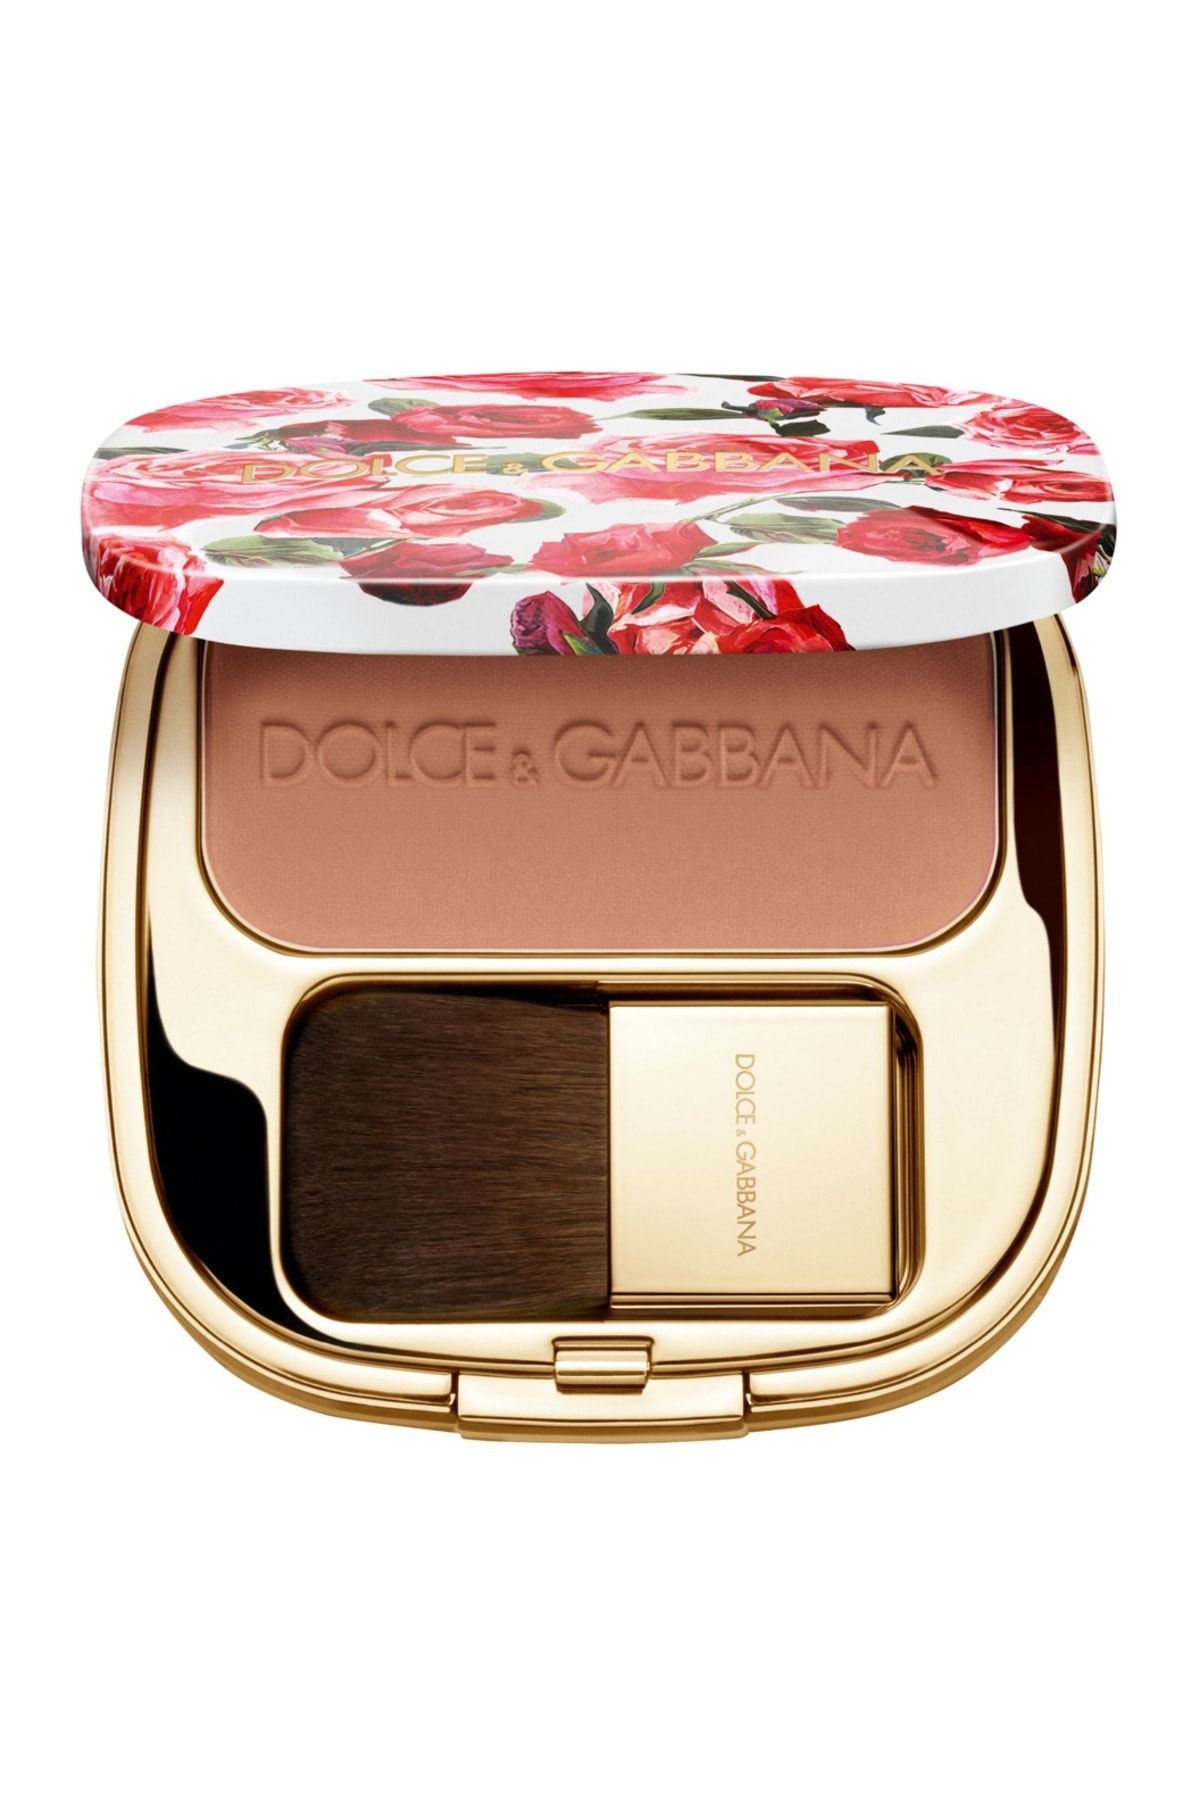 Dolce&Gabbana Blush Of Roses Powder